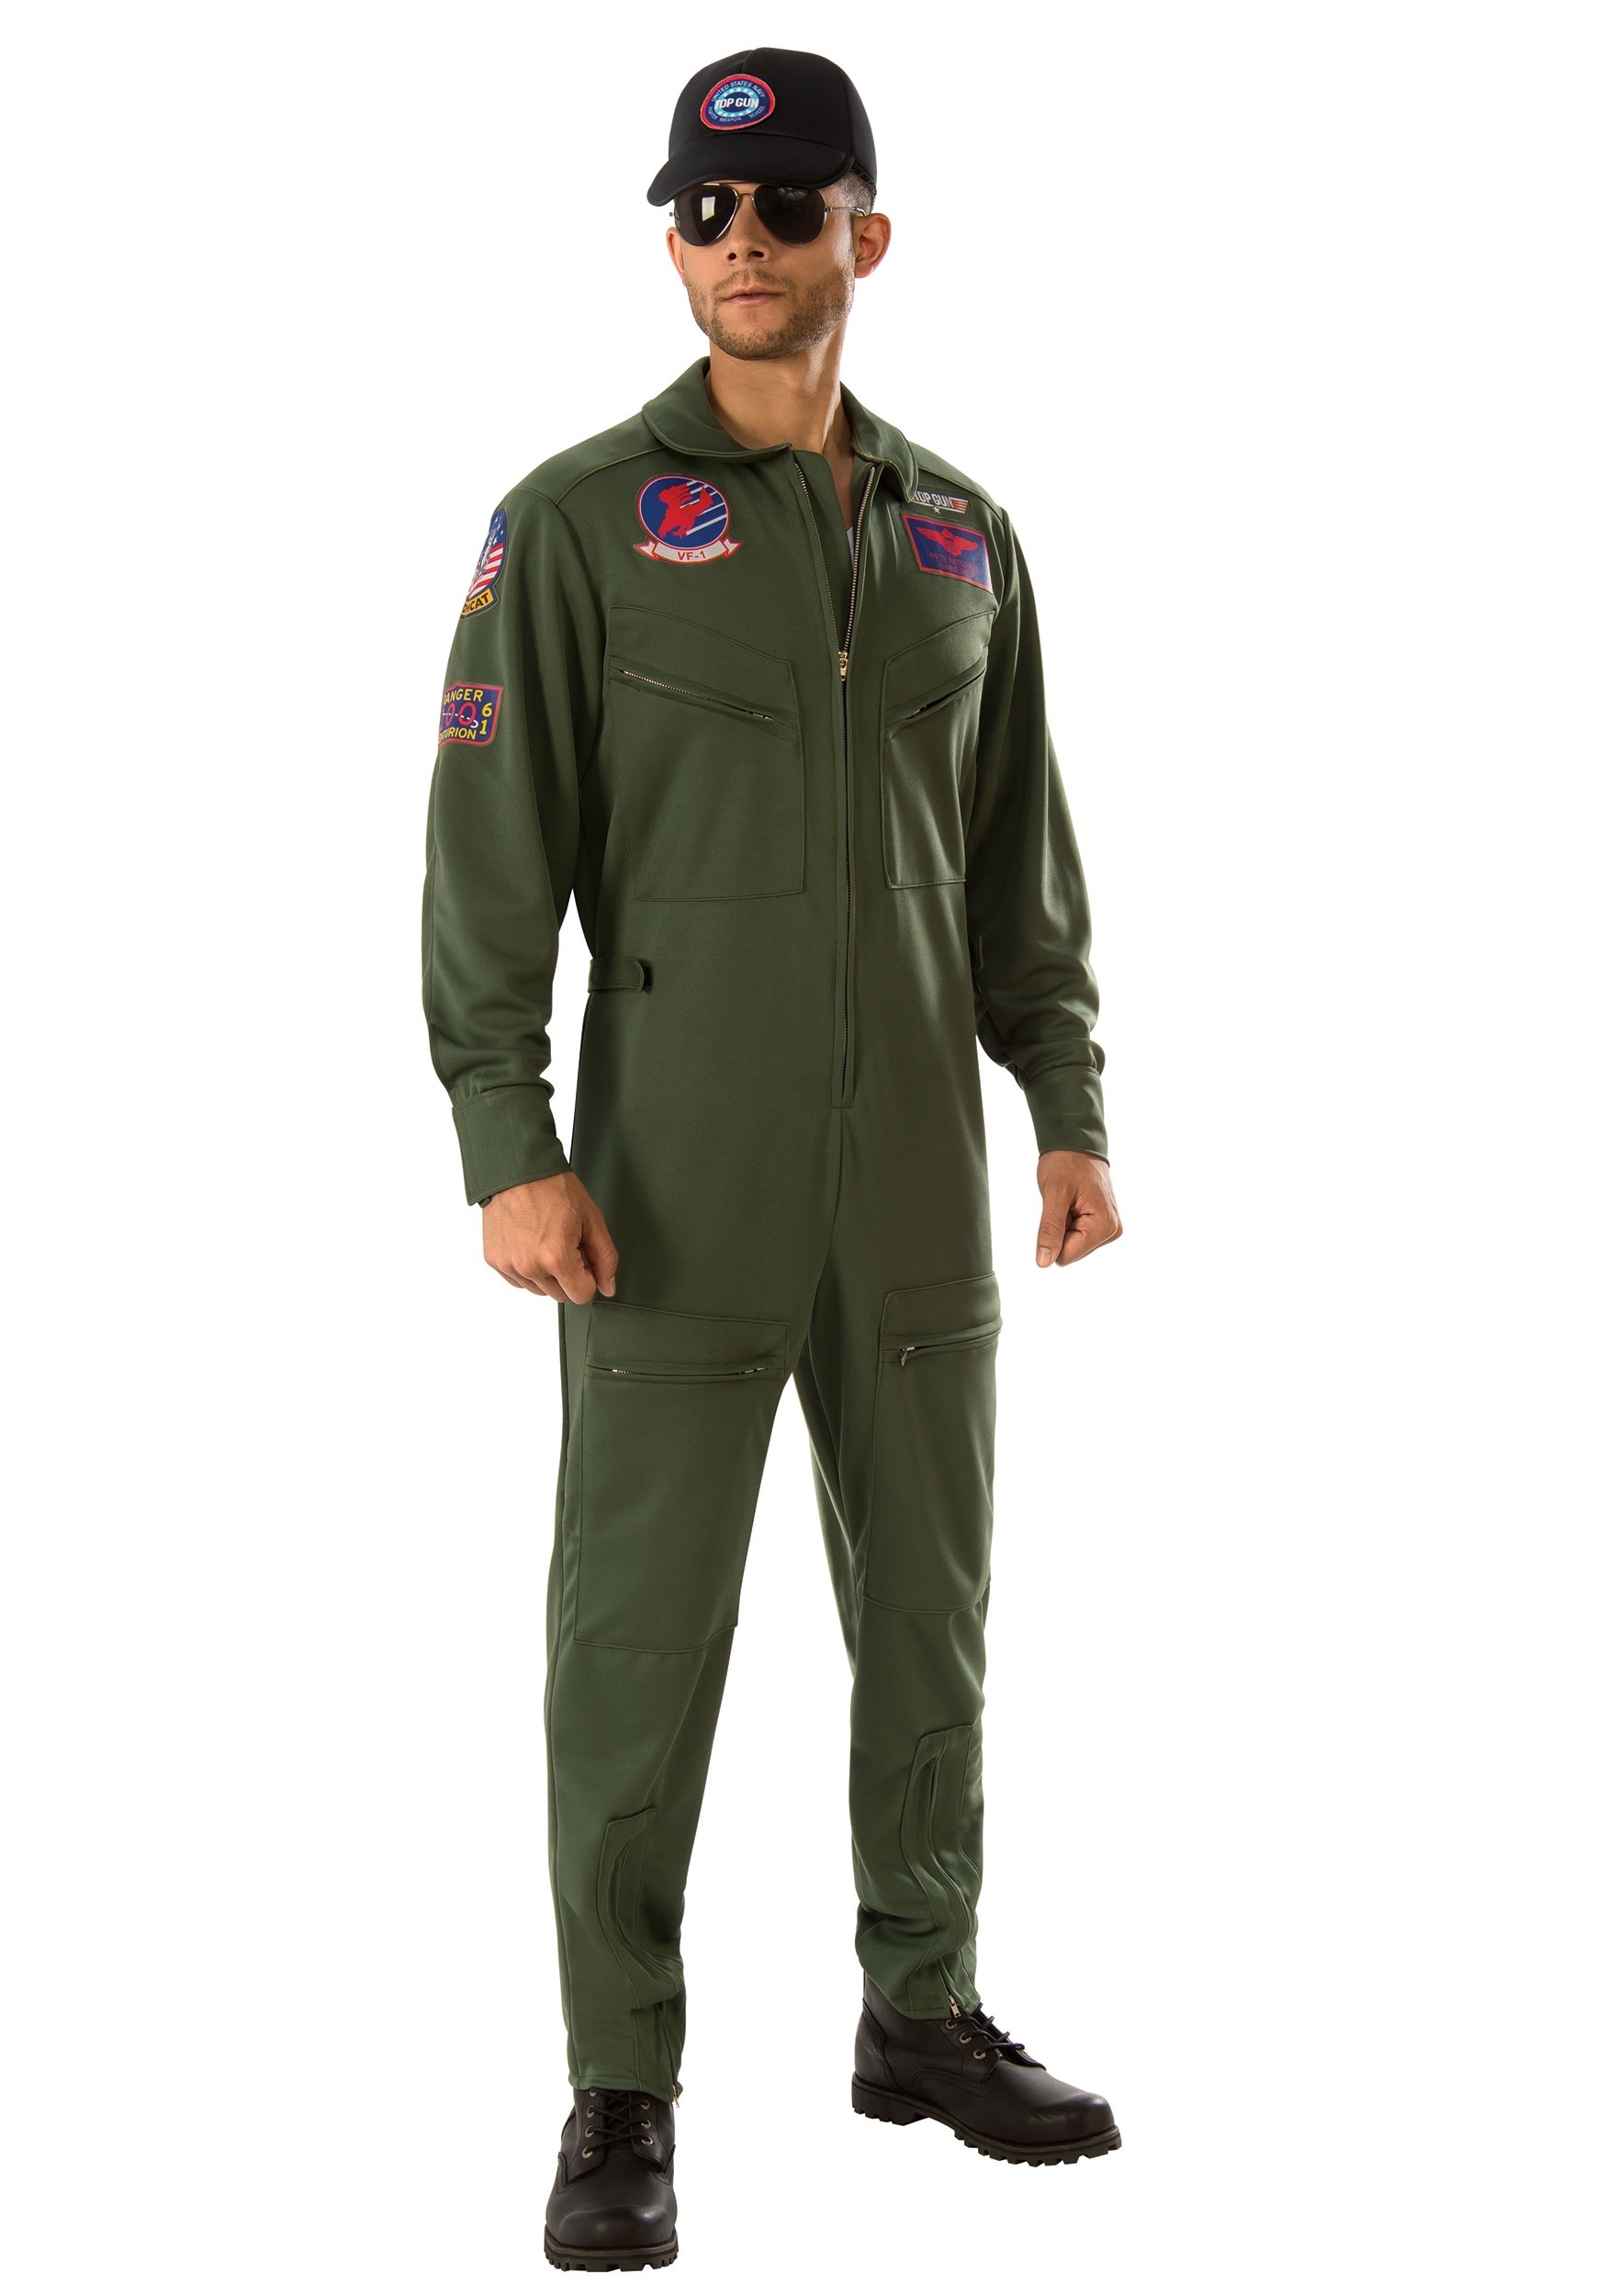 Image of Top Gun Men's Jumpsuit Costume | Fighter Pilot Costume ID RU821157-S